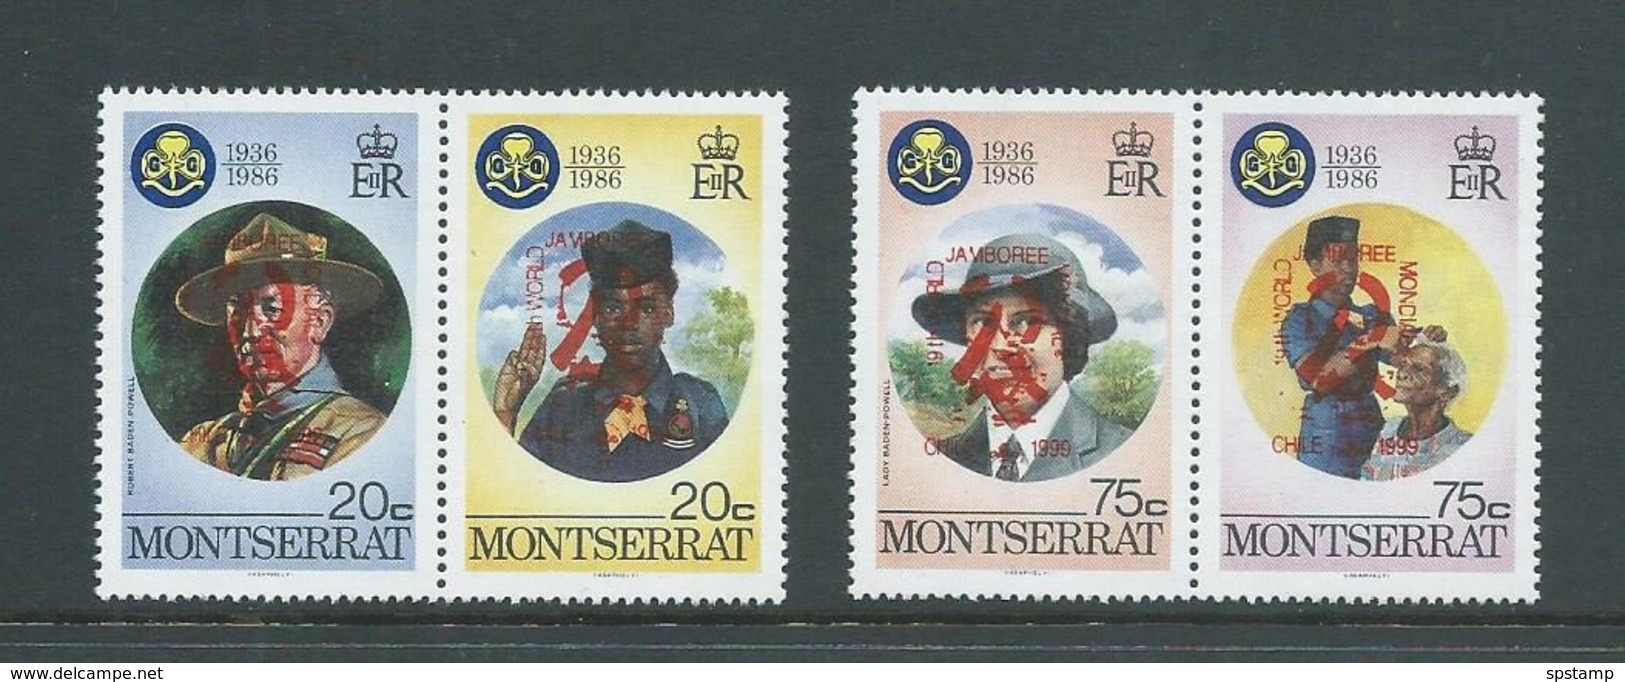 Montserrat 1995 Boy Scout Jamboree Overprints On Girl Guide Anniversary Set Of 2 Pairs MNH - Montserrat